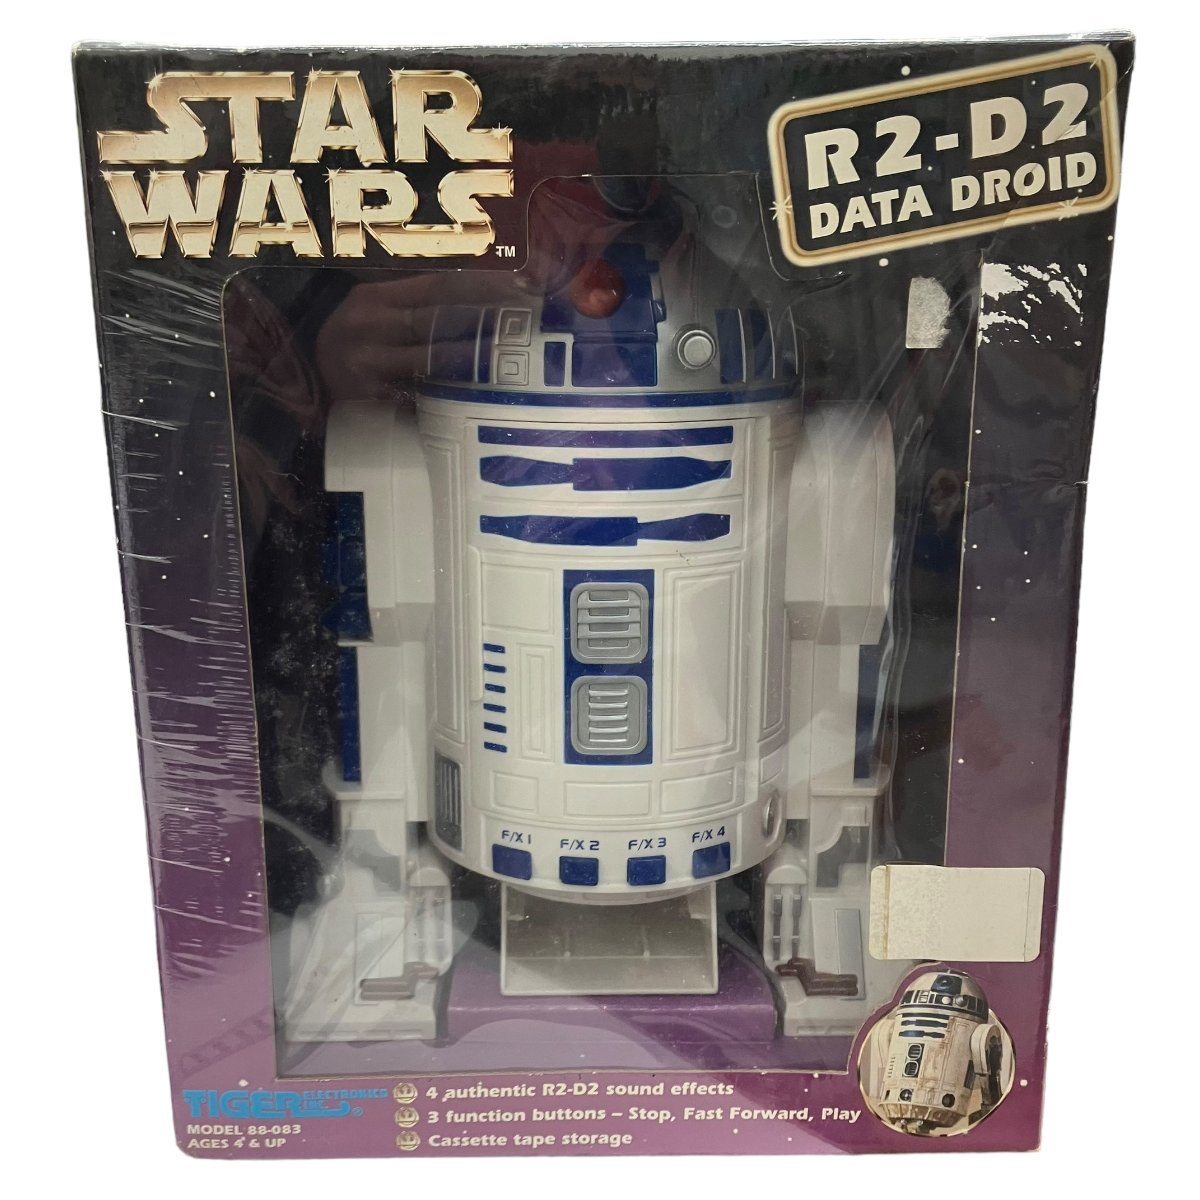 ★STAR WARS R2-D2 DATA DROID カセットプレーヤー★_画像1